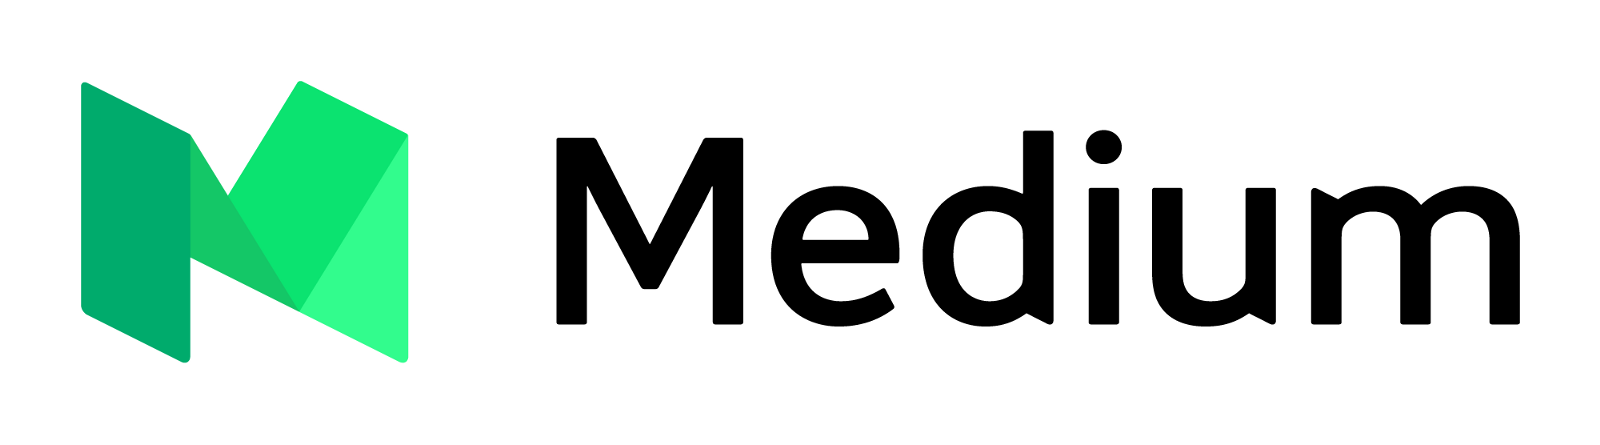 Medium Logo PNG - 33826